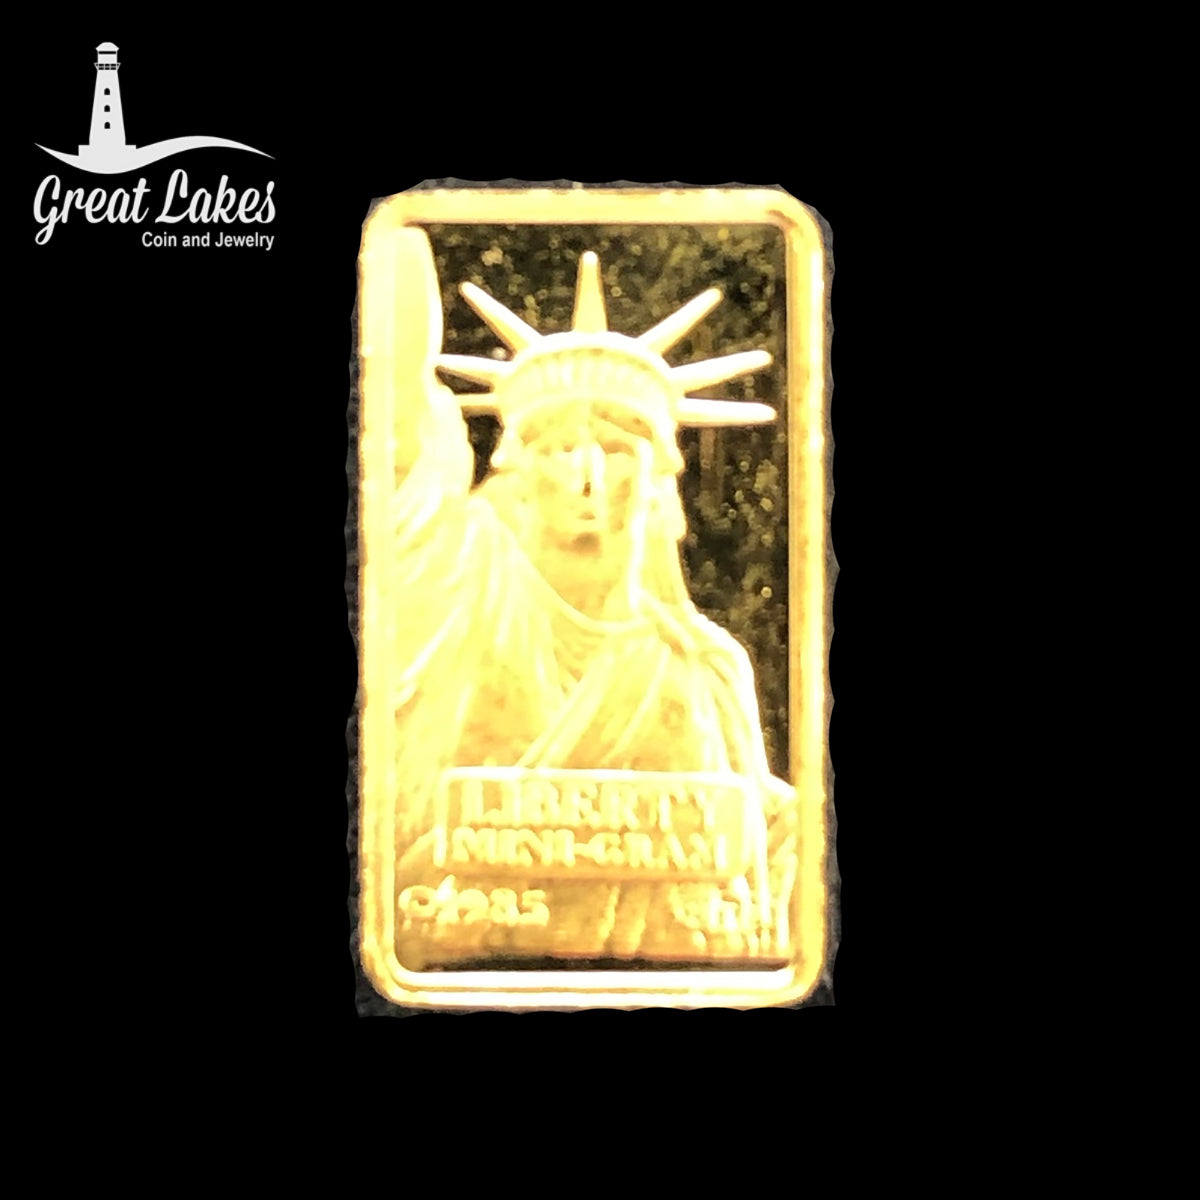 Credit Suisse 1 g Gold Bar (Secondary Market)